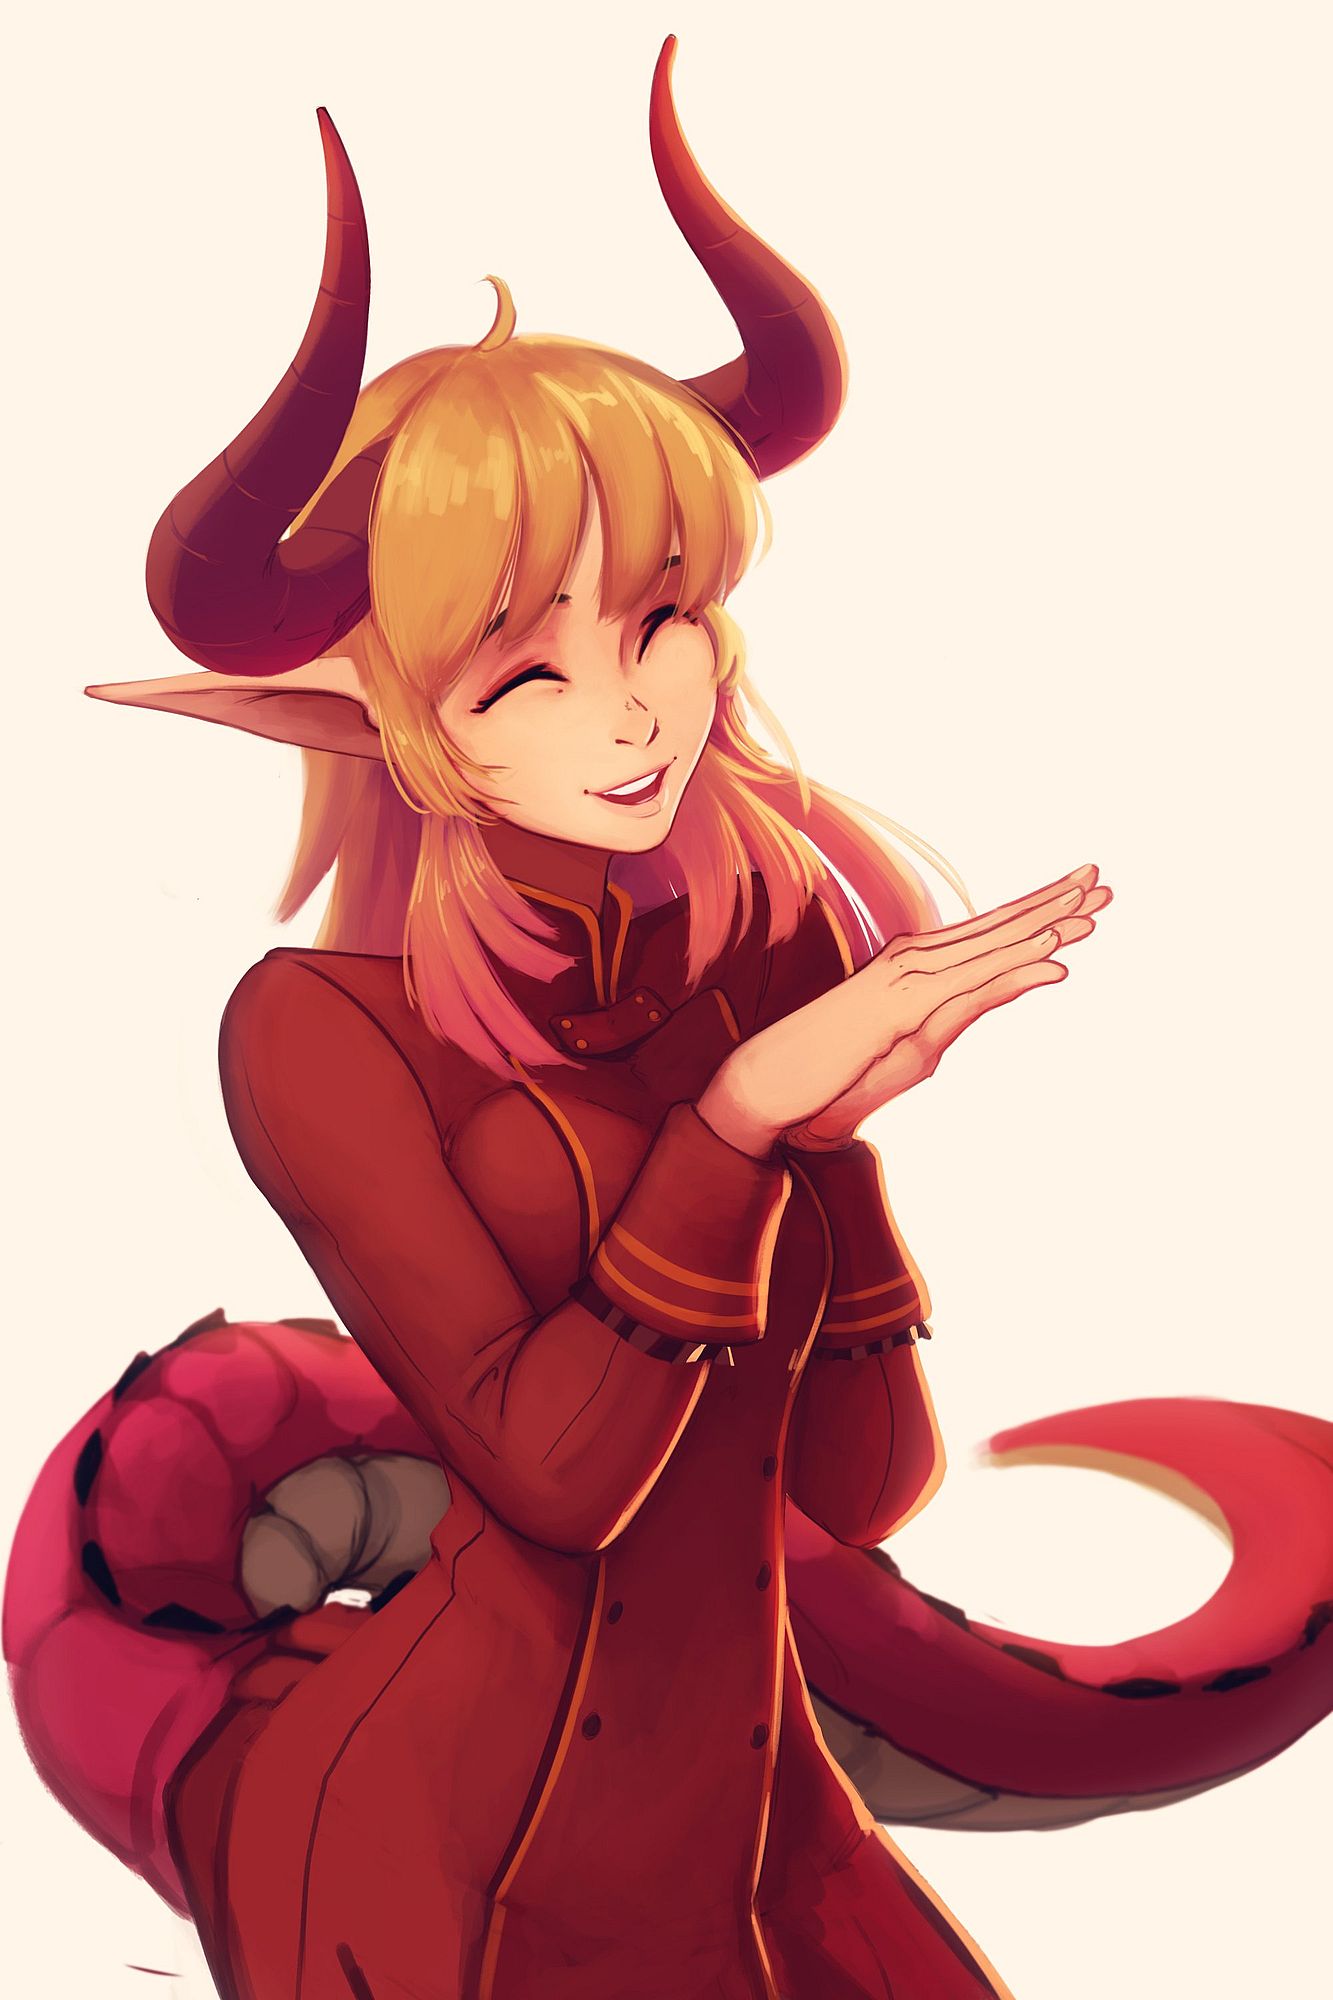 Pretty dragon girl with horns and tail: Original anime characters (Artist: Raichiyo 33)